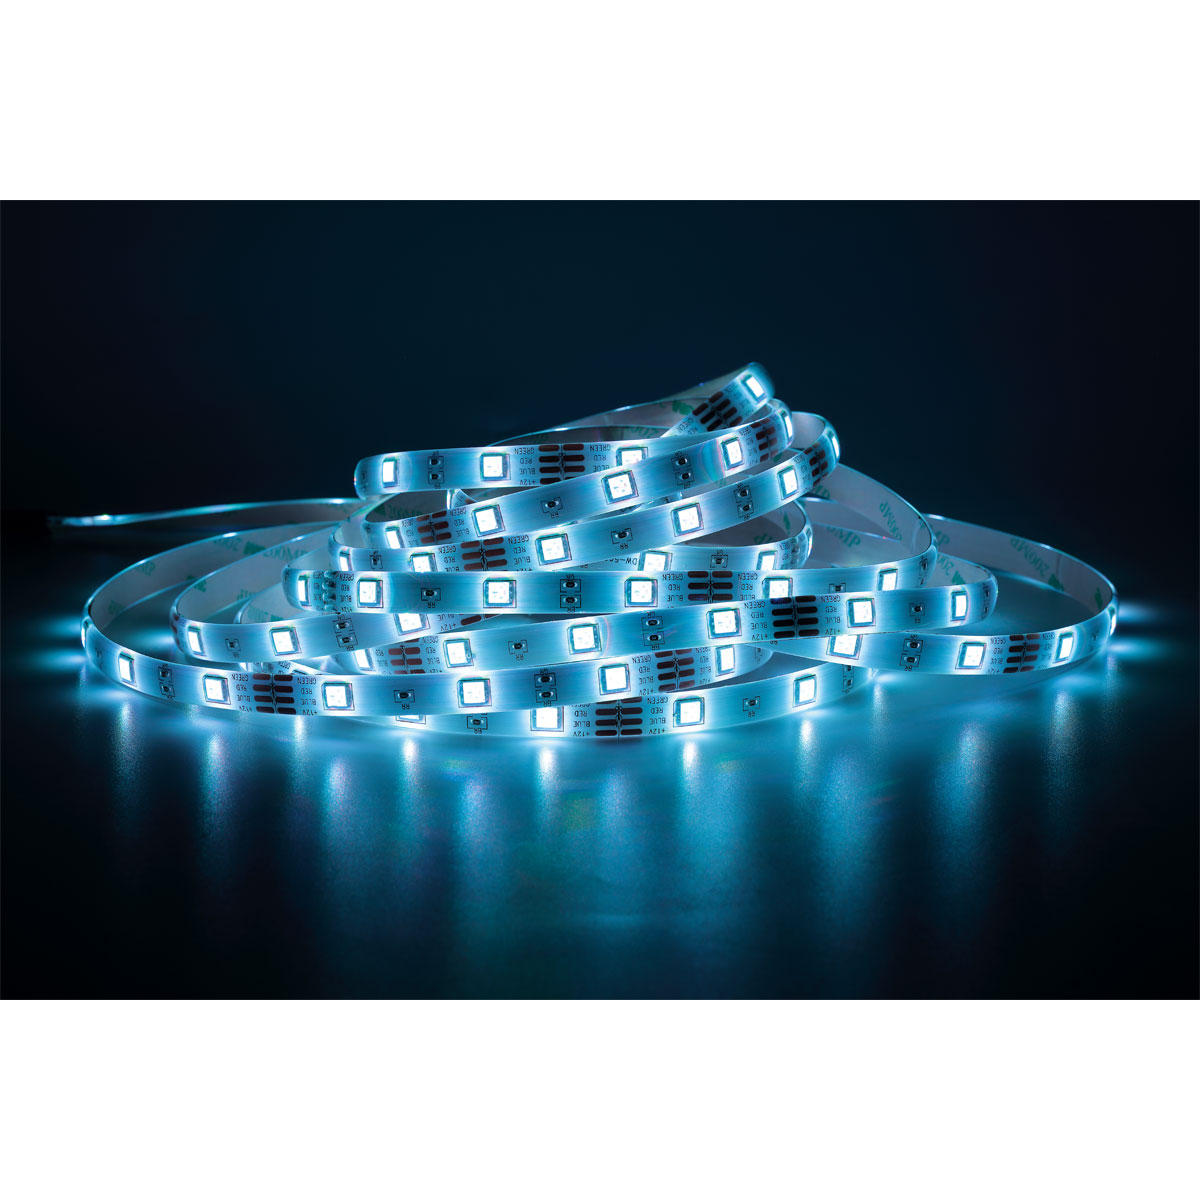 Flector LED-Lichtband RGB | m 221378 Musiksensor mit 5